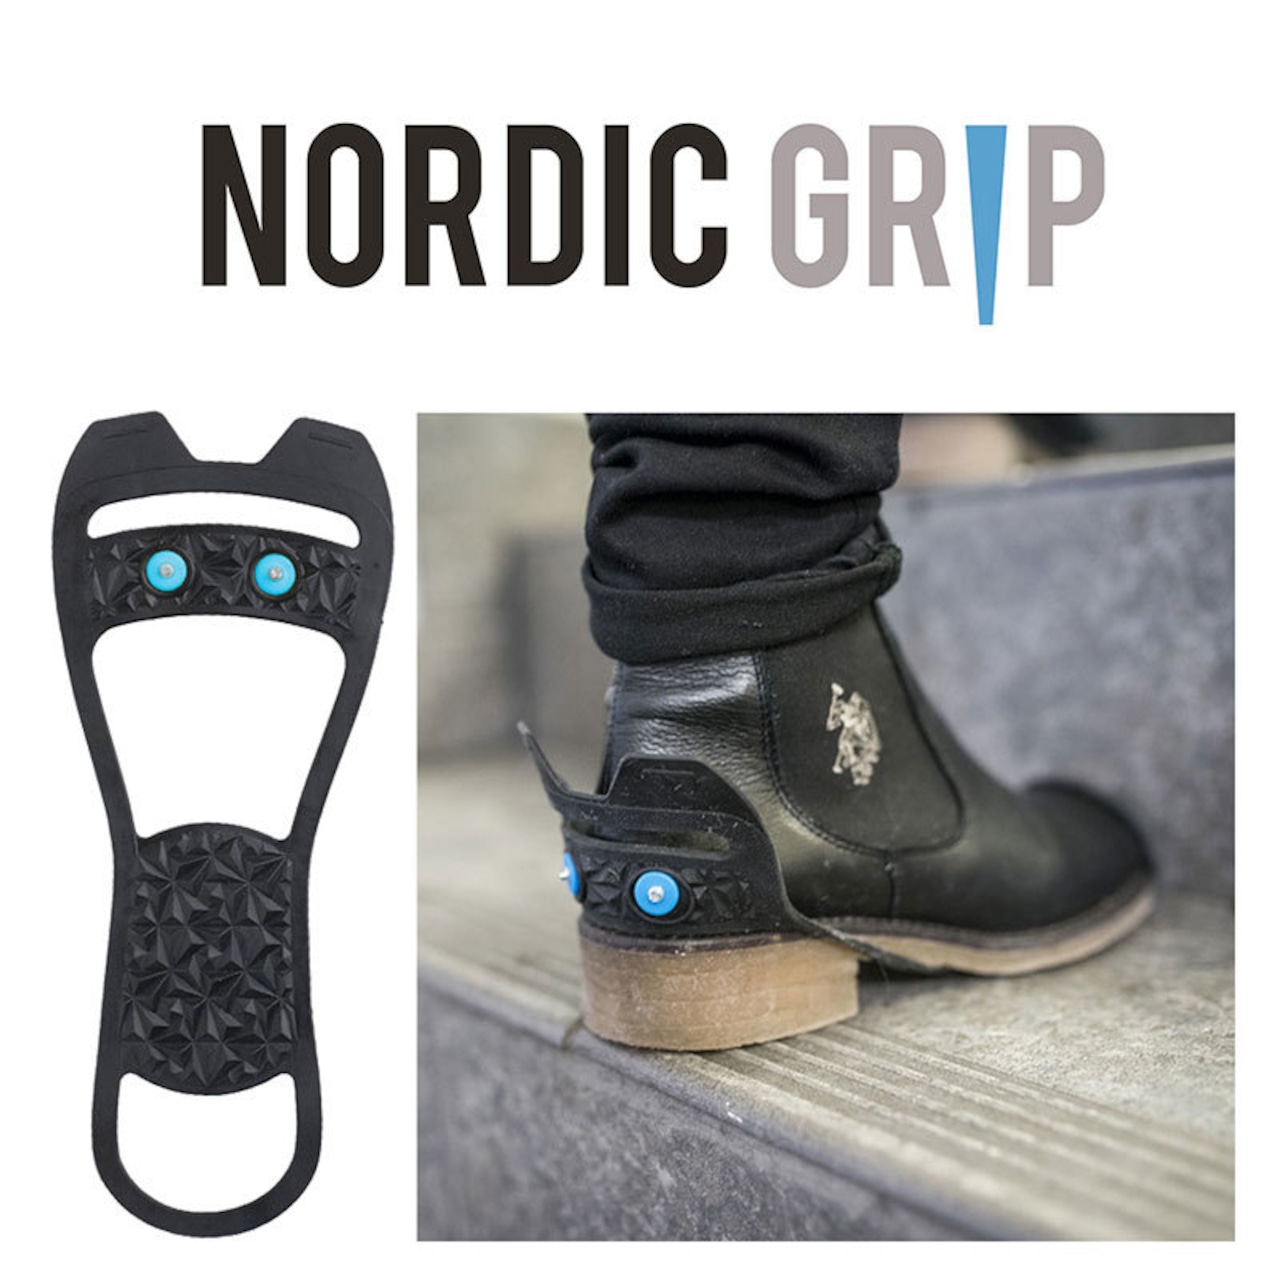 NORDIC GRIP(ノルディックグリップ) FLEXI 靴底用 滑り止め 凍結 路面 雪対策 積雪 雪道 スパイク アイスグリッパー スノーグラバー 転倒防止 滑らない ND-10